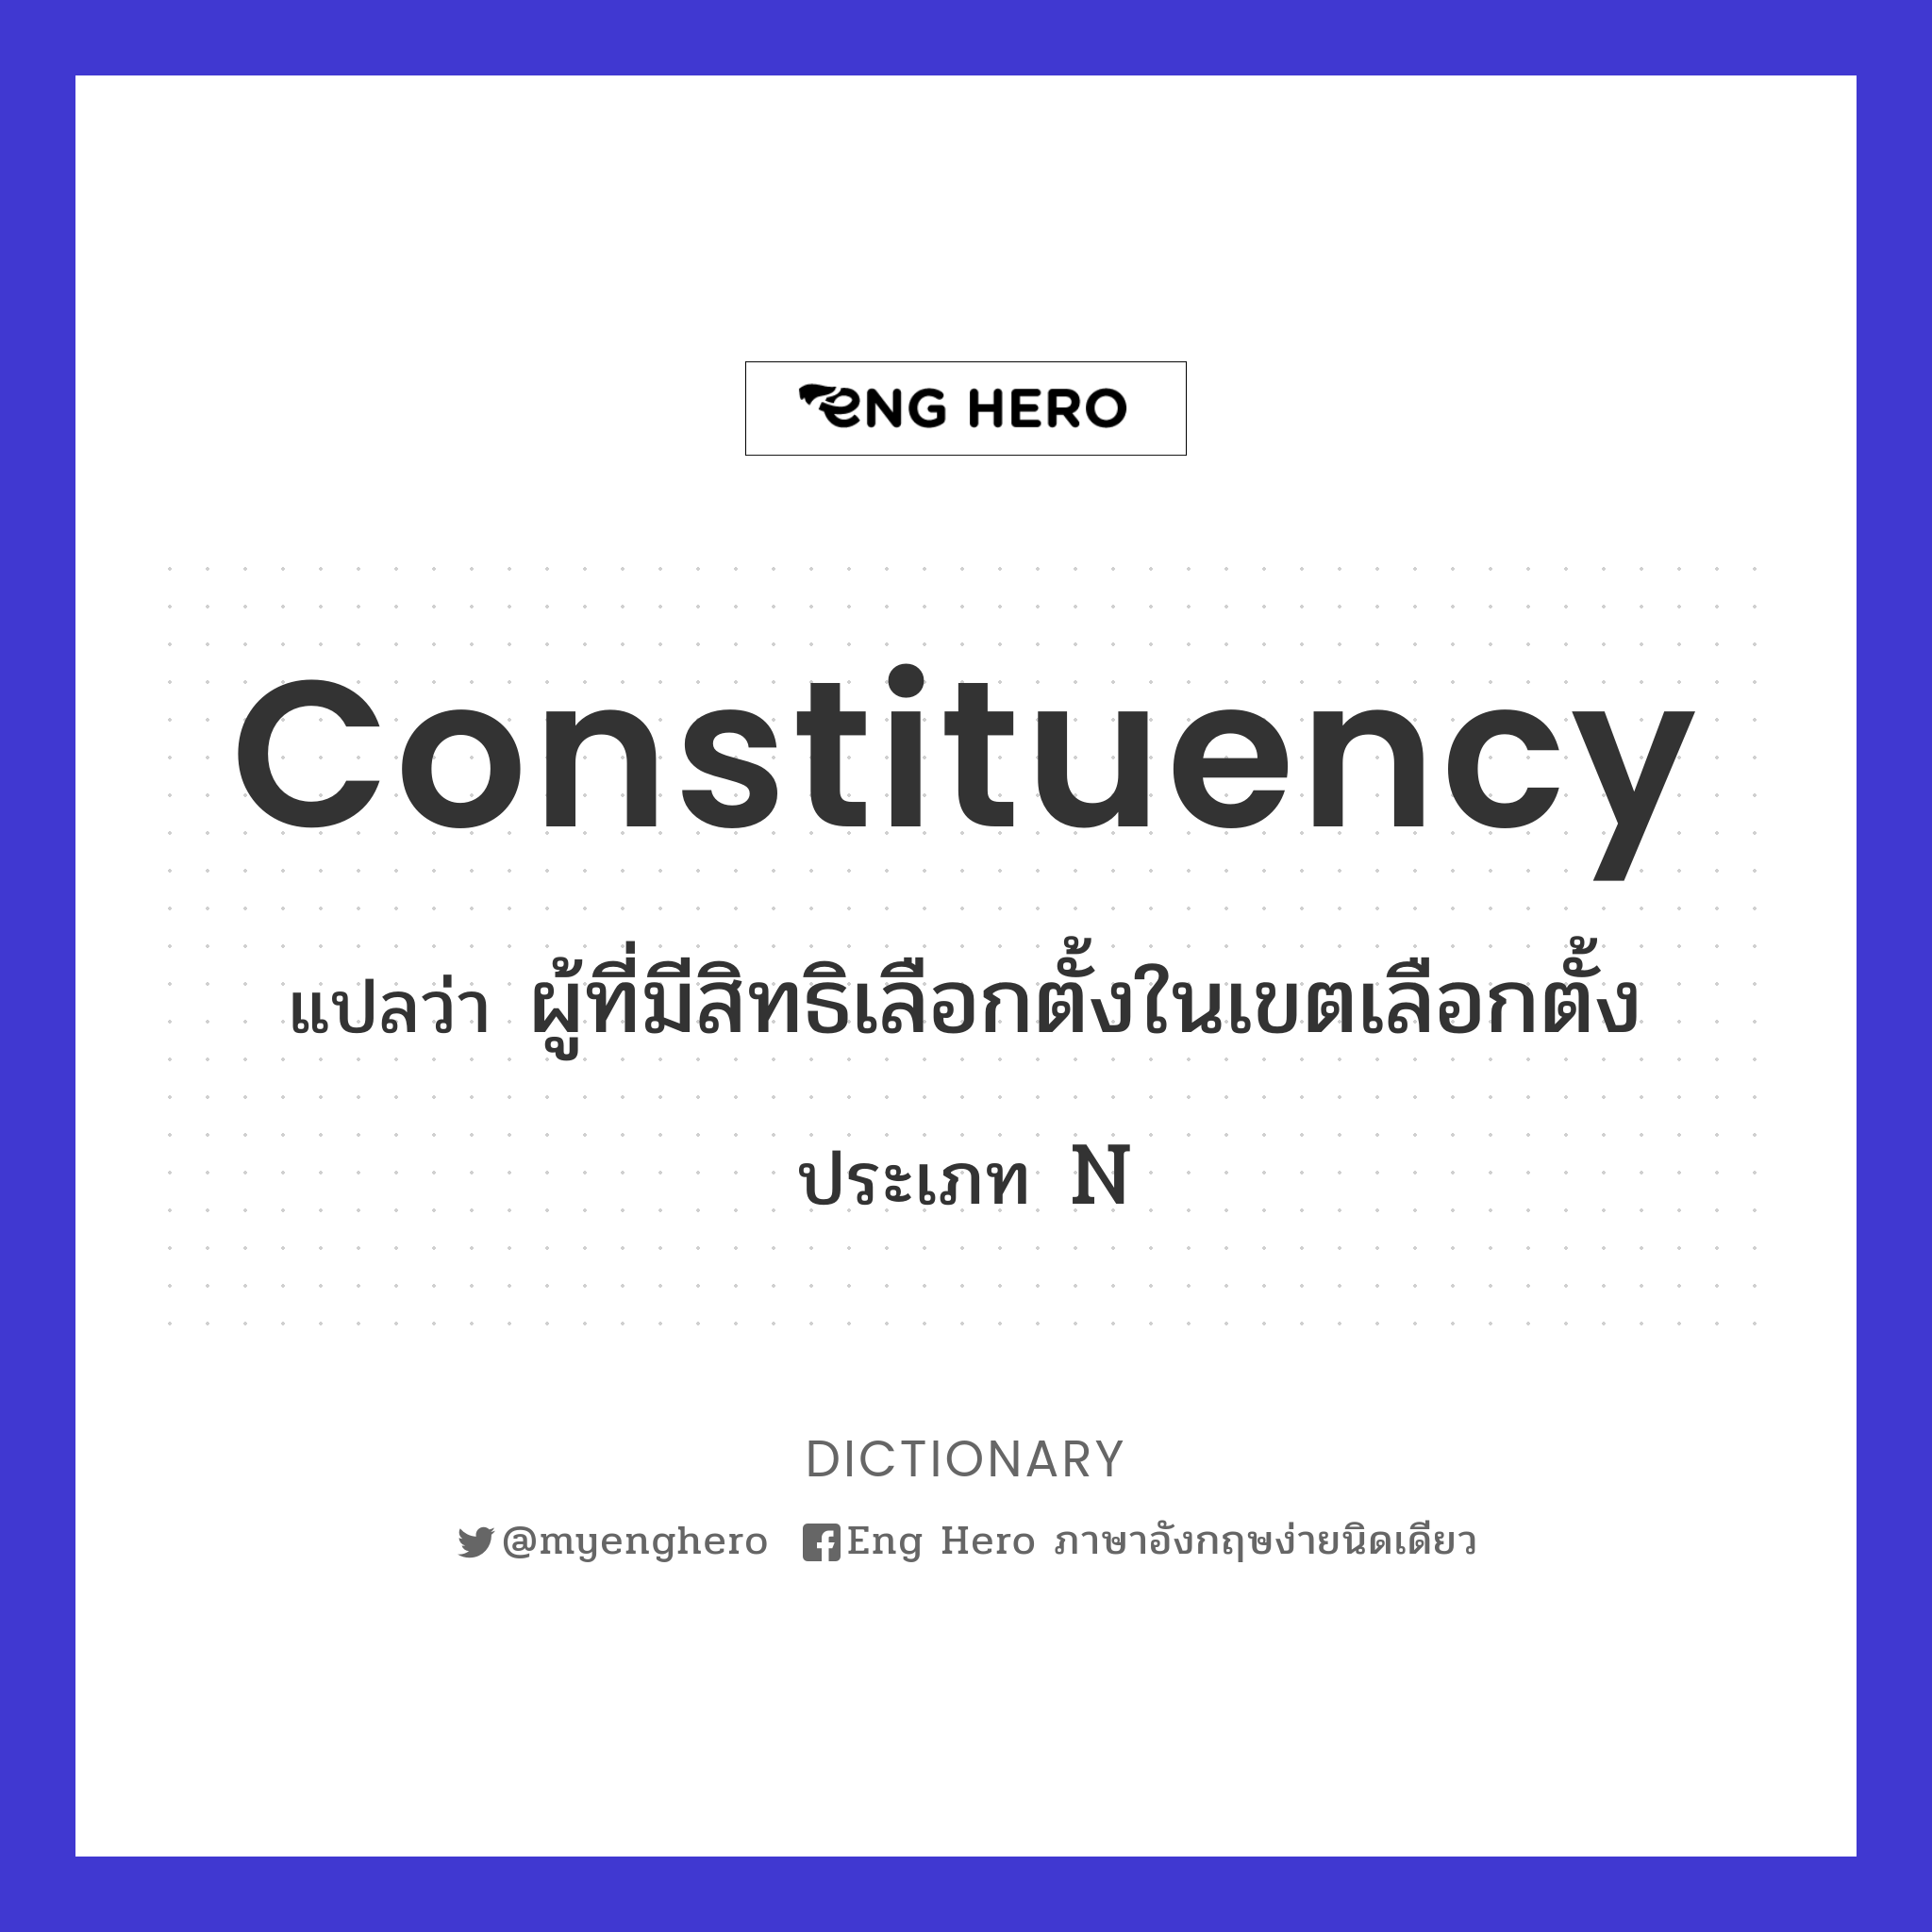 constituency